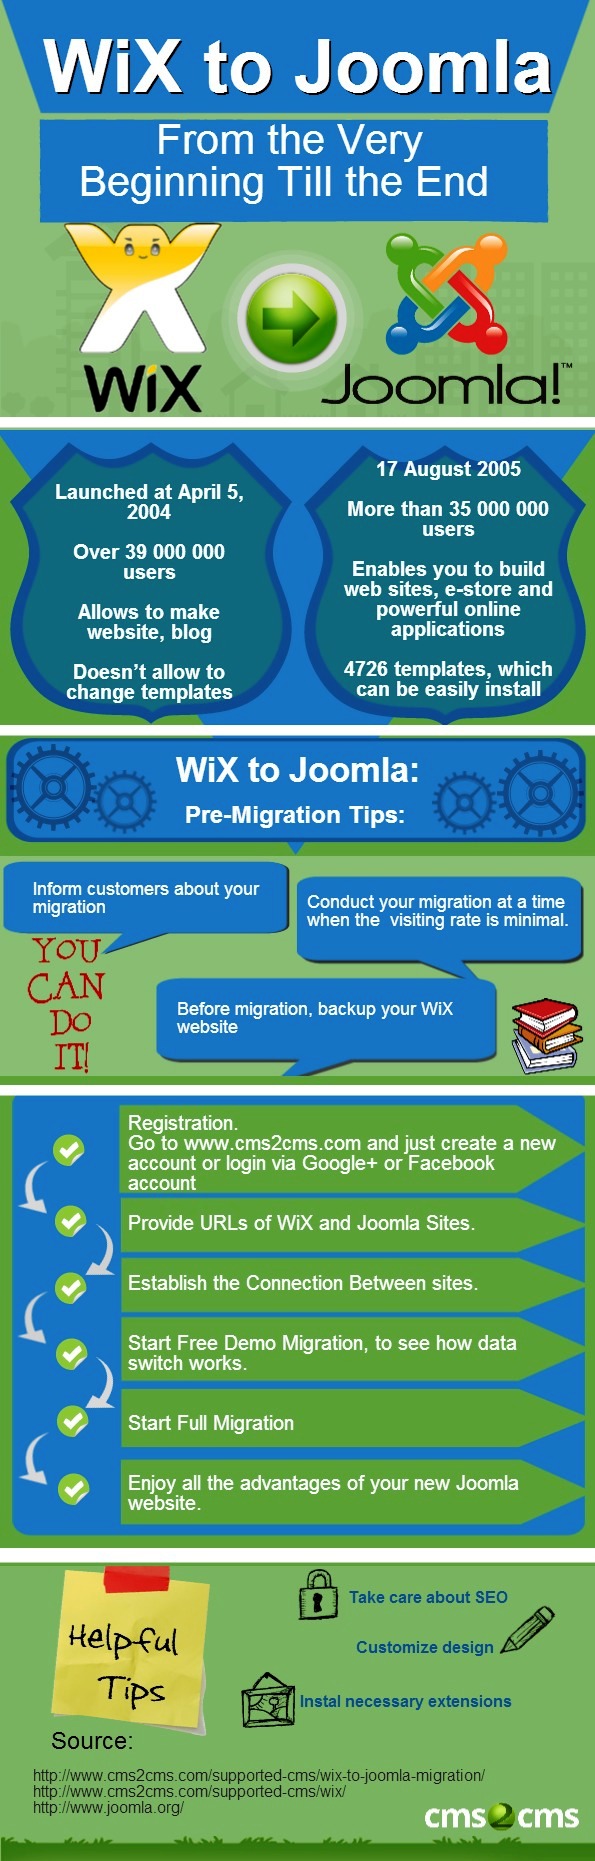 wix-to-joomla-migration-aisite